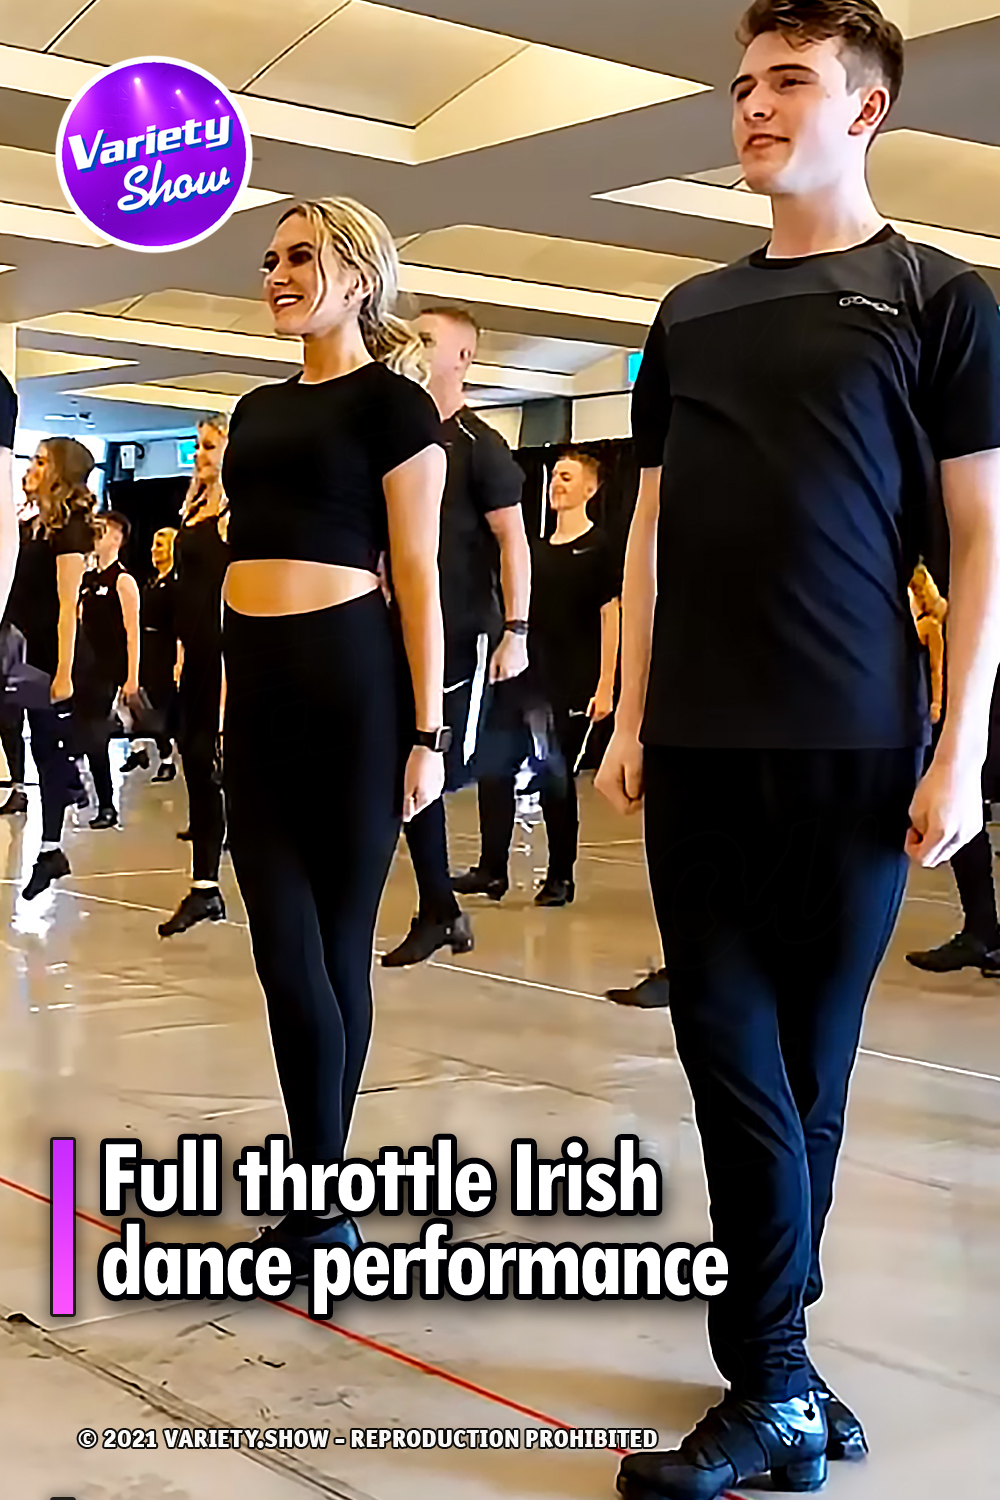 Full throttle Irish dance performance